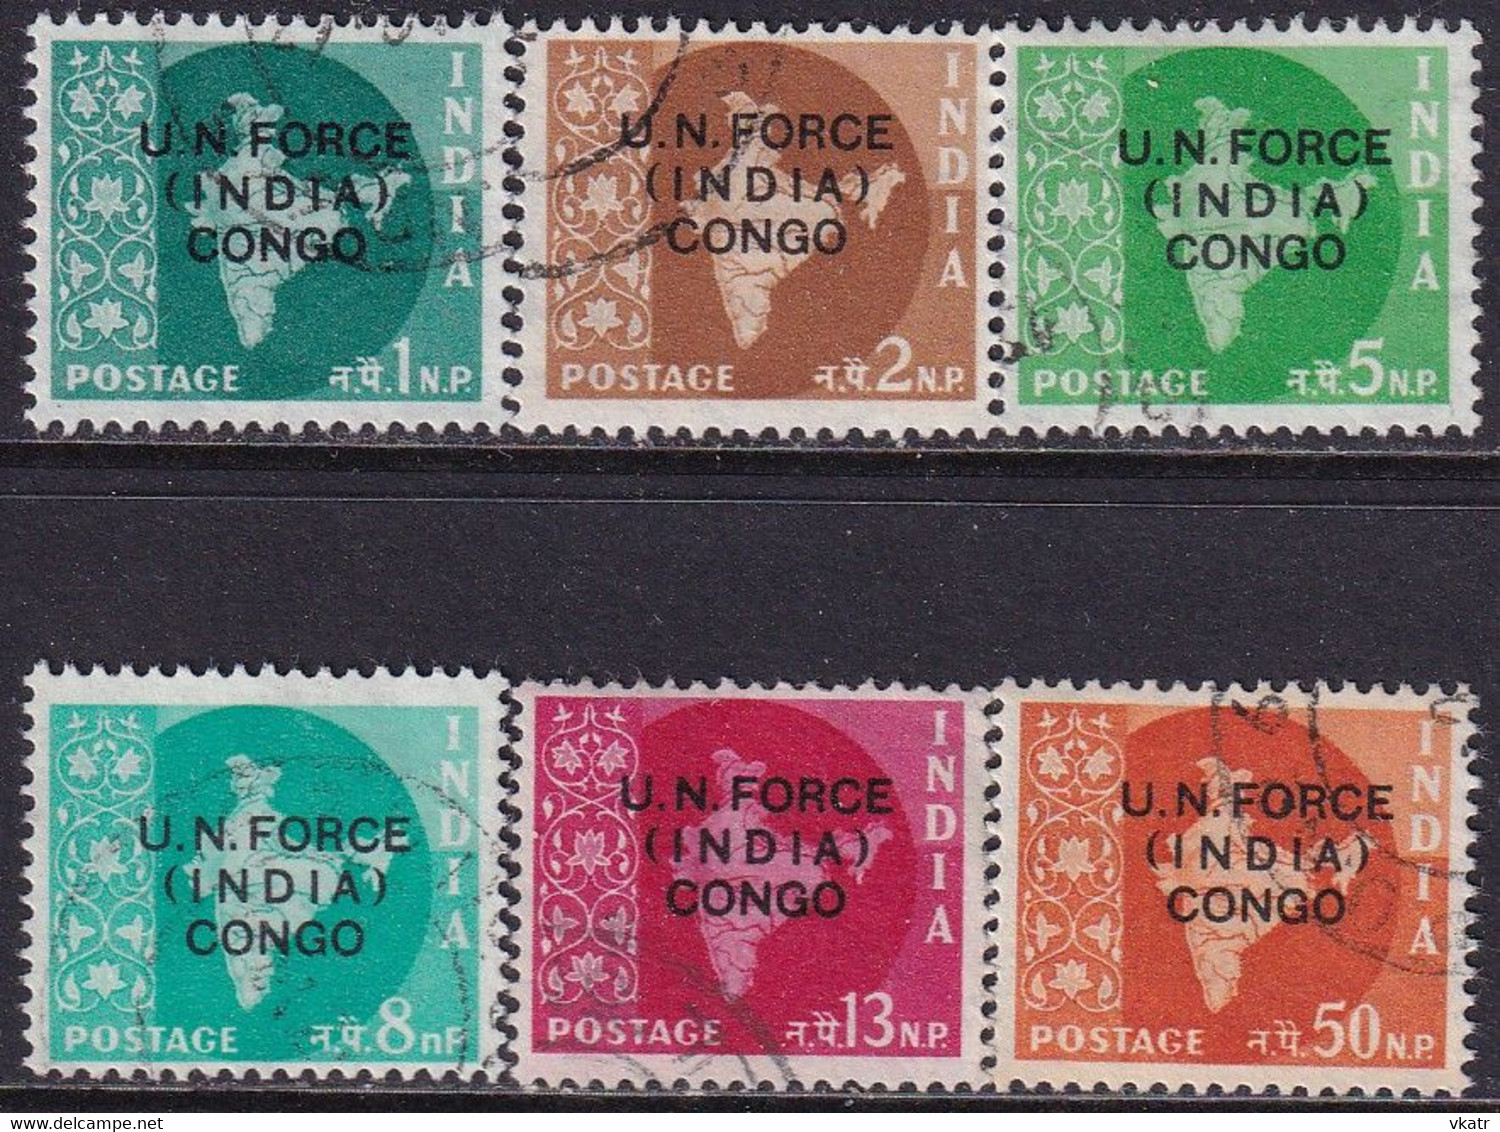 1962 India Stamps Optd U.N. FORCE (INDIA) CONGO SG U1-U6 Used Compl.set - Military Service Stamp